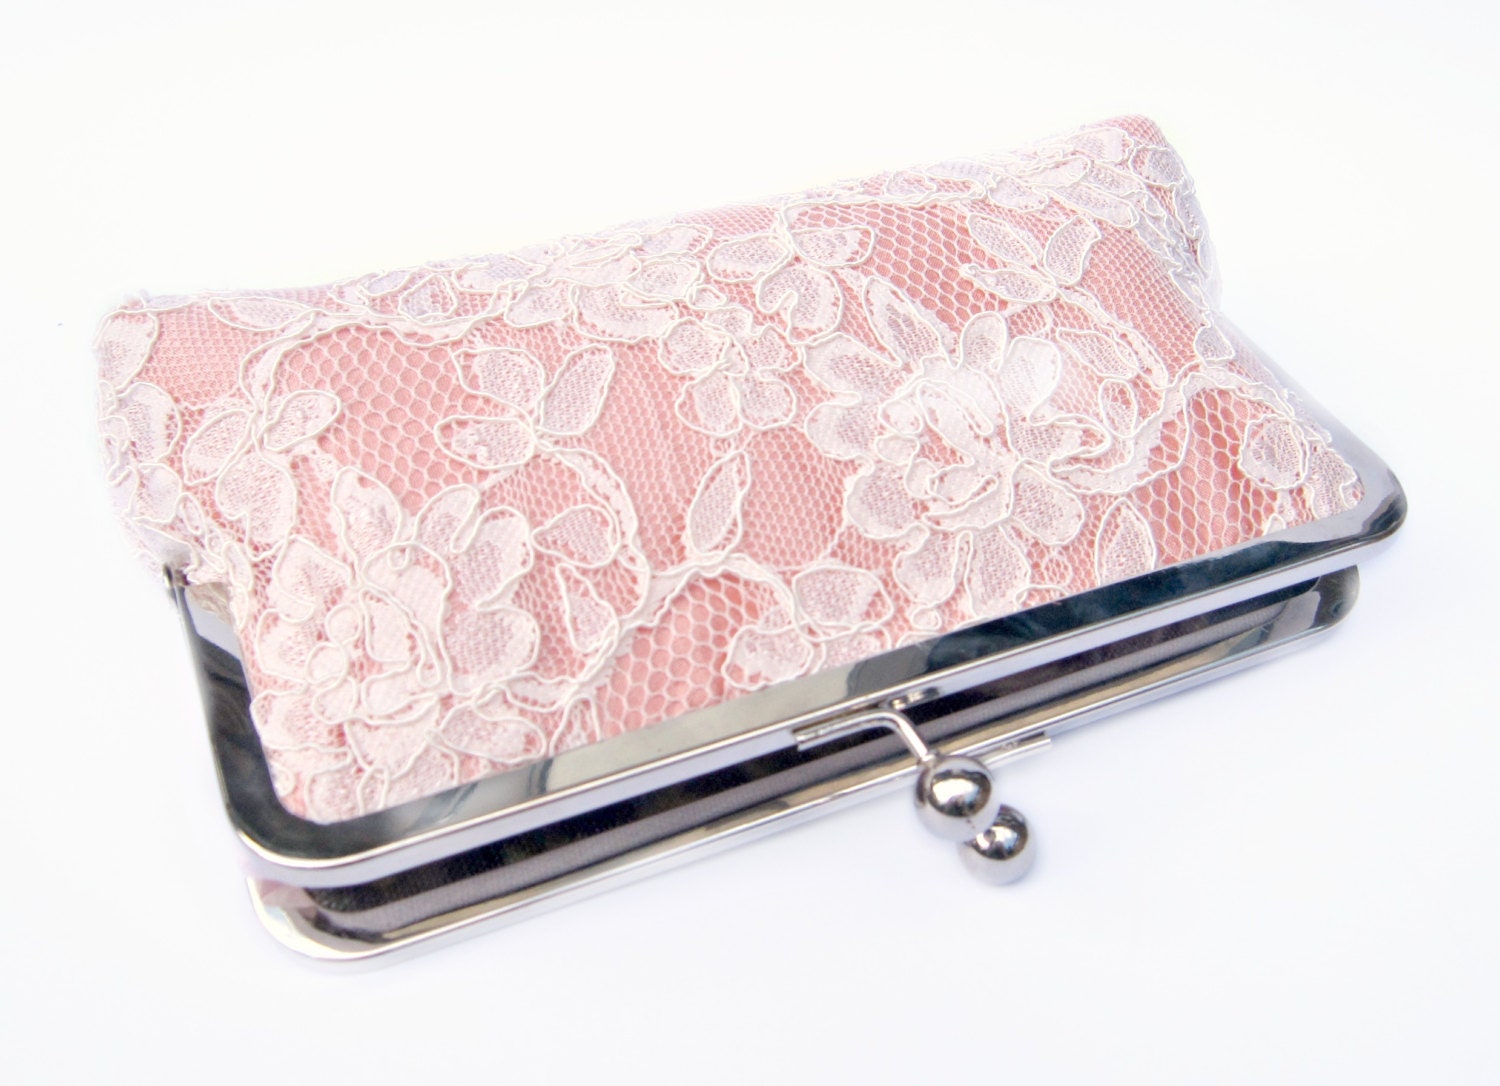 Lace bridal clutch bag coral pink wedding clutch rose | Etsy